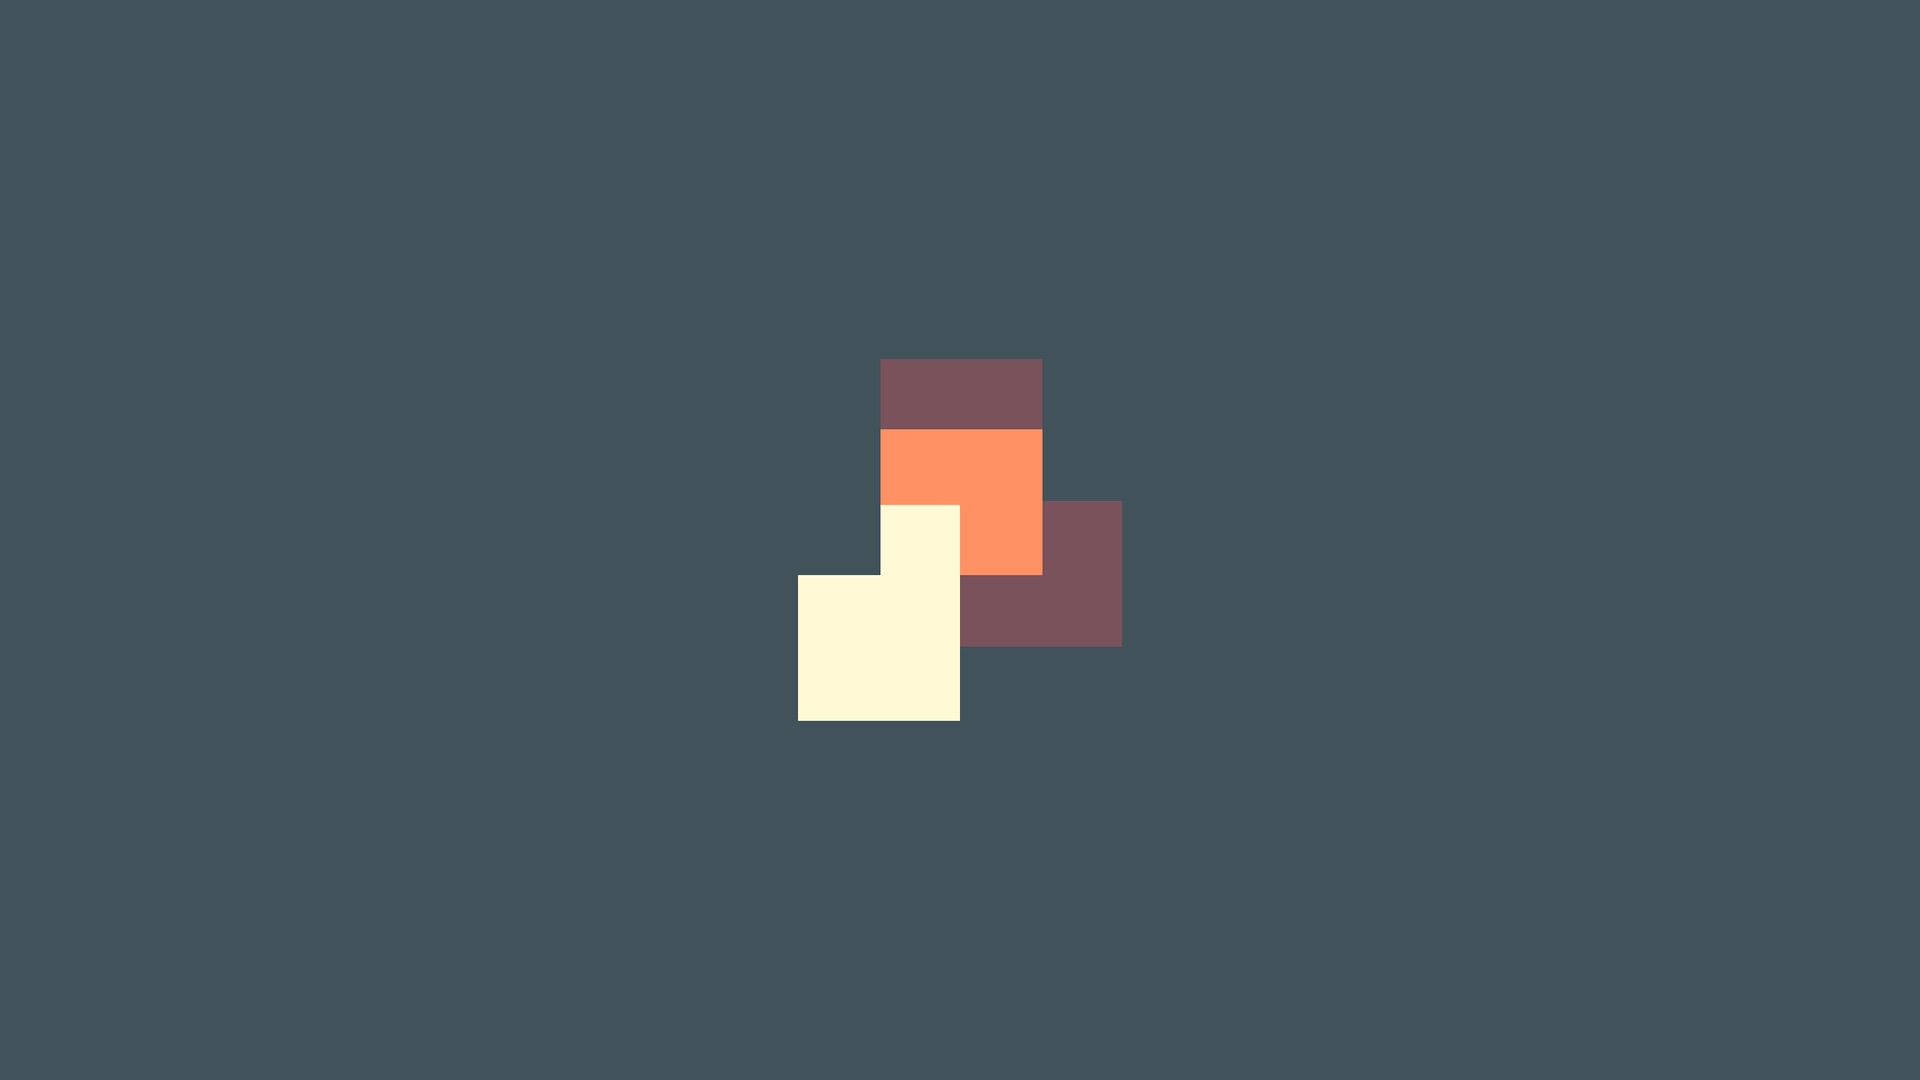 General 1920x1080 minimalism geometry simple background artwork Tetris video games video game art